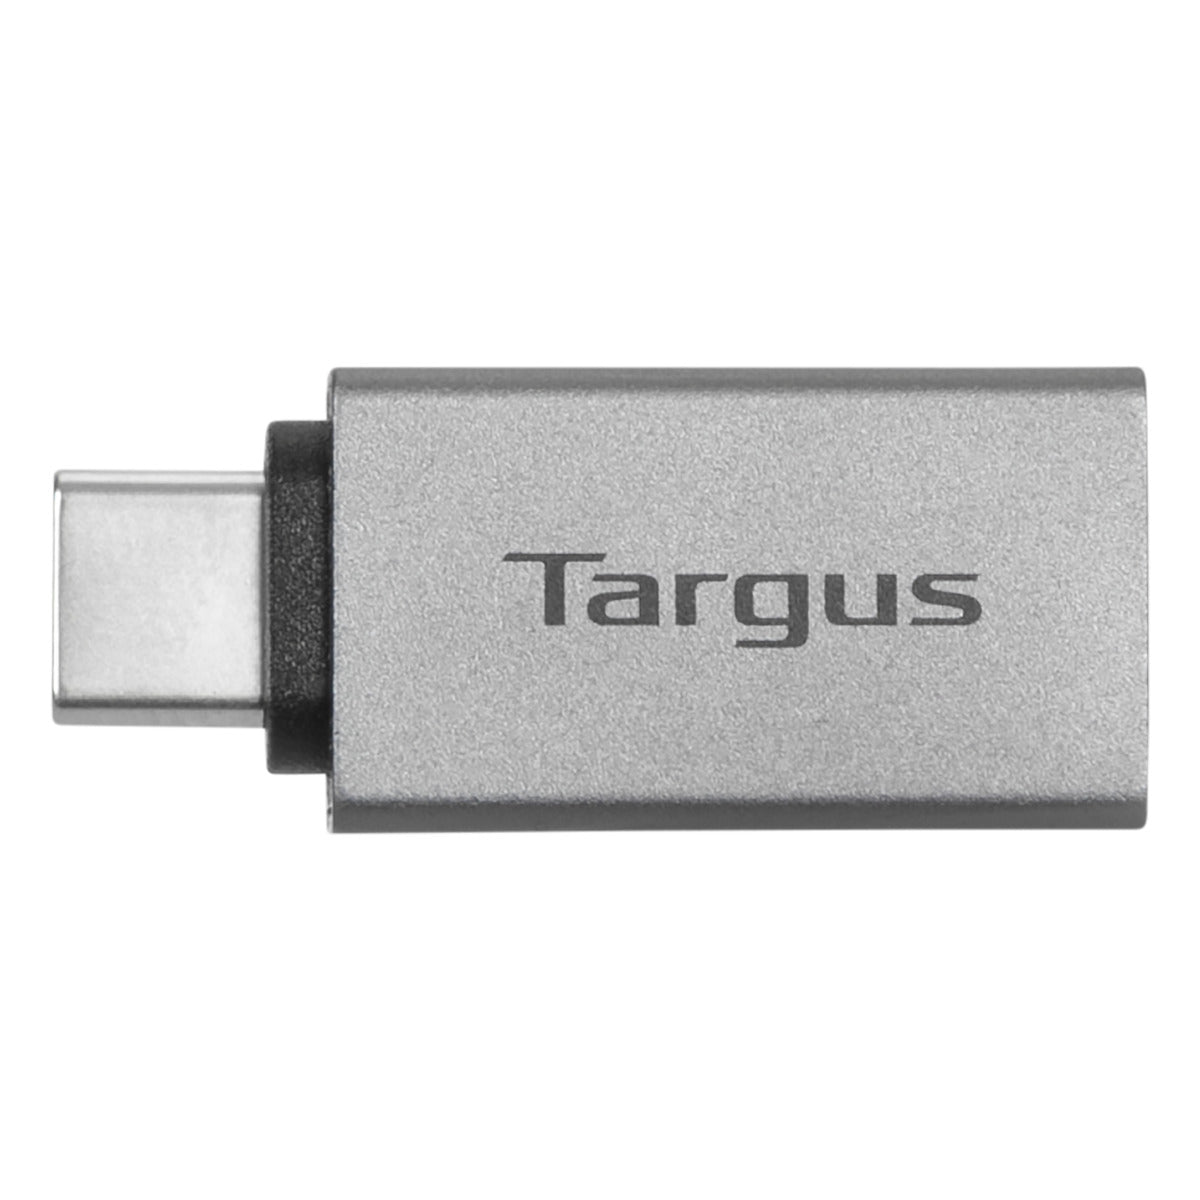 USB-C SINGLE VIDEO ADAPTER WITH 4K HDMI/DVI/VGA ACA961USZ